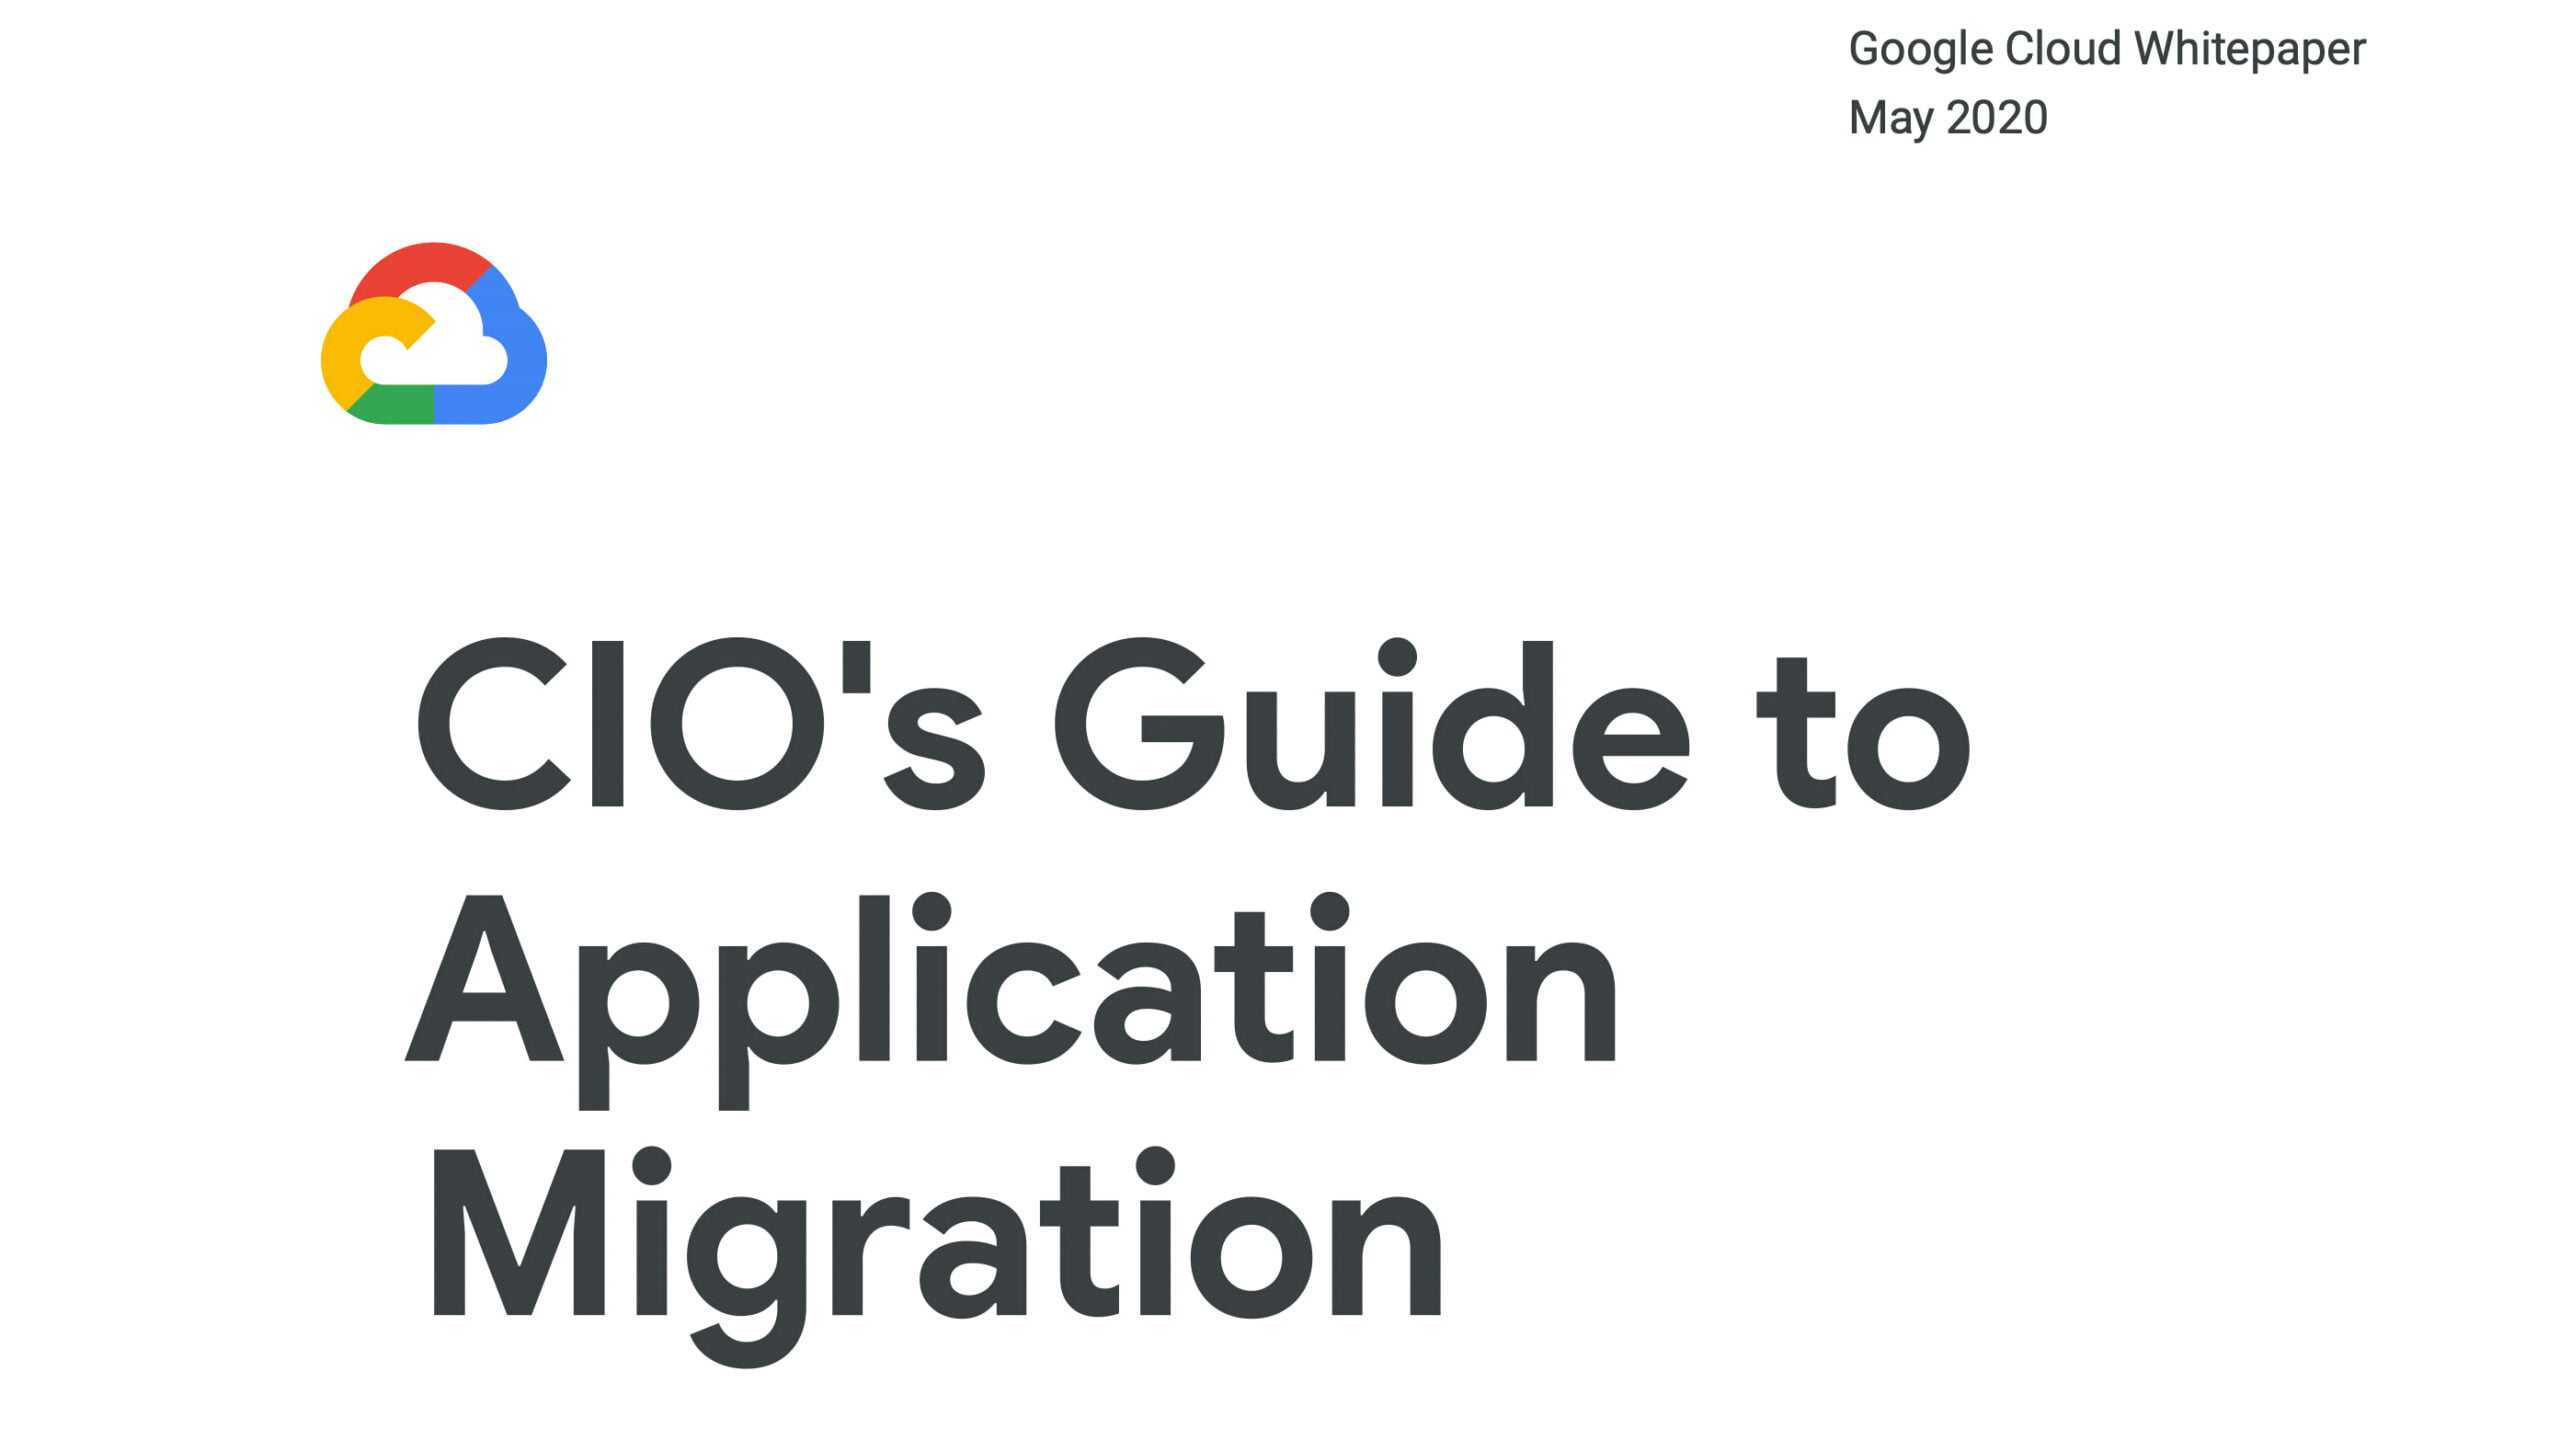 8. CIO Guide to application migration